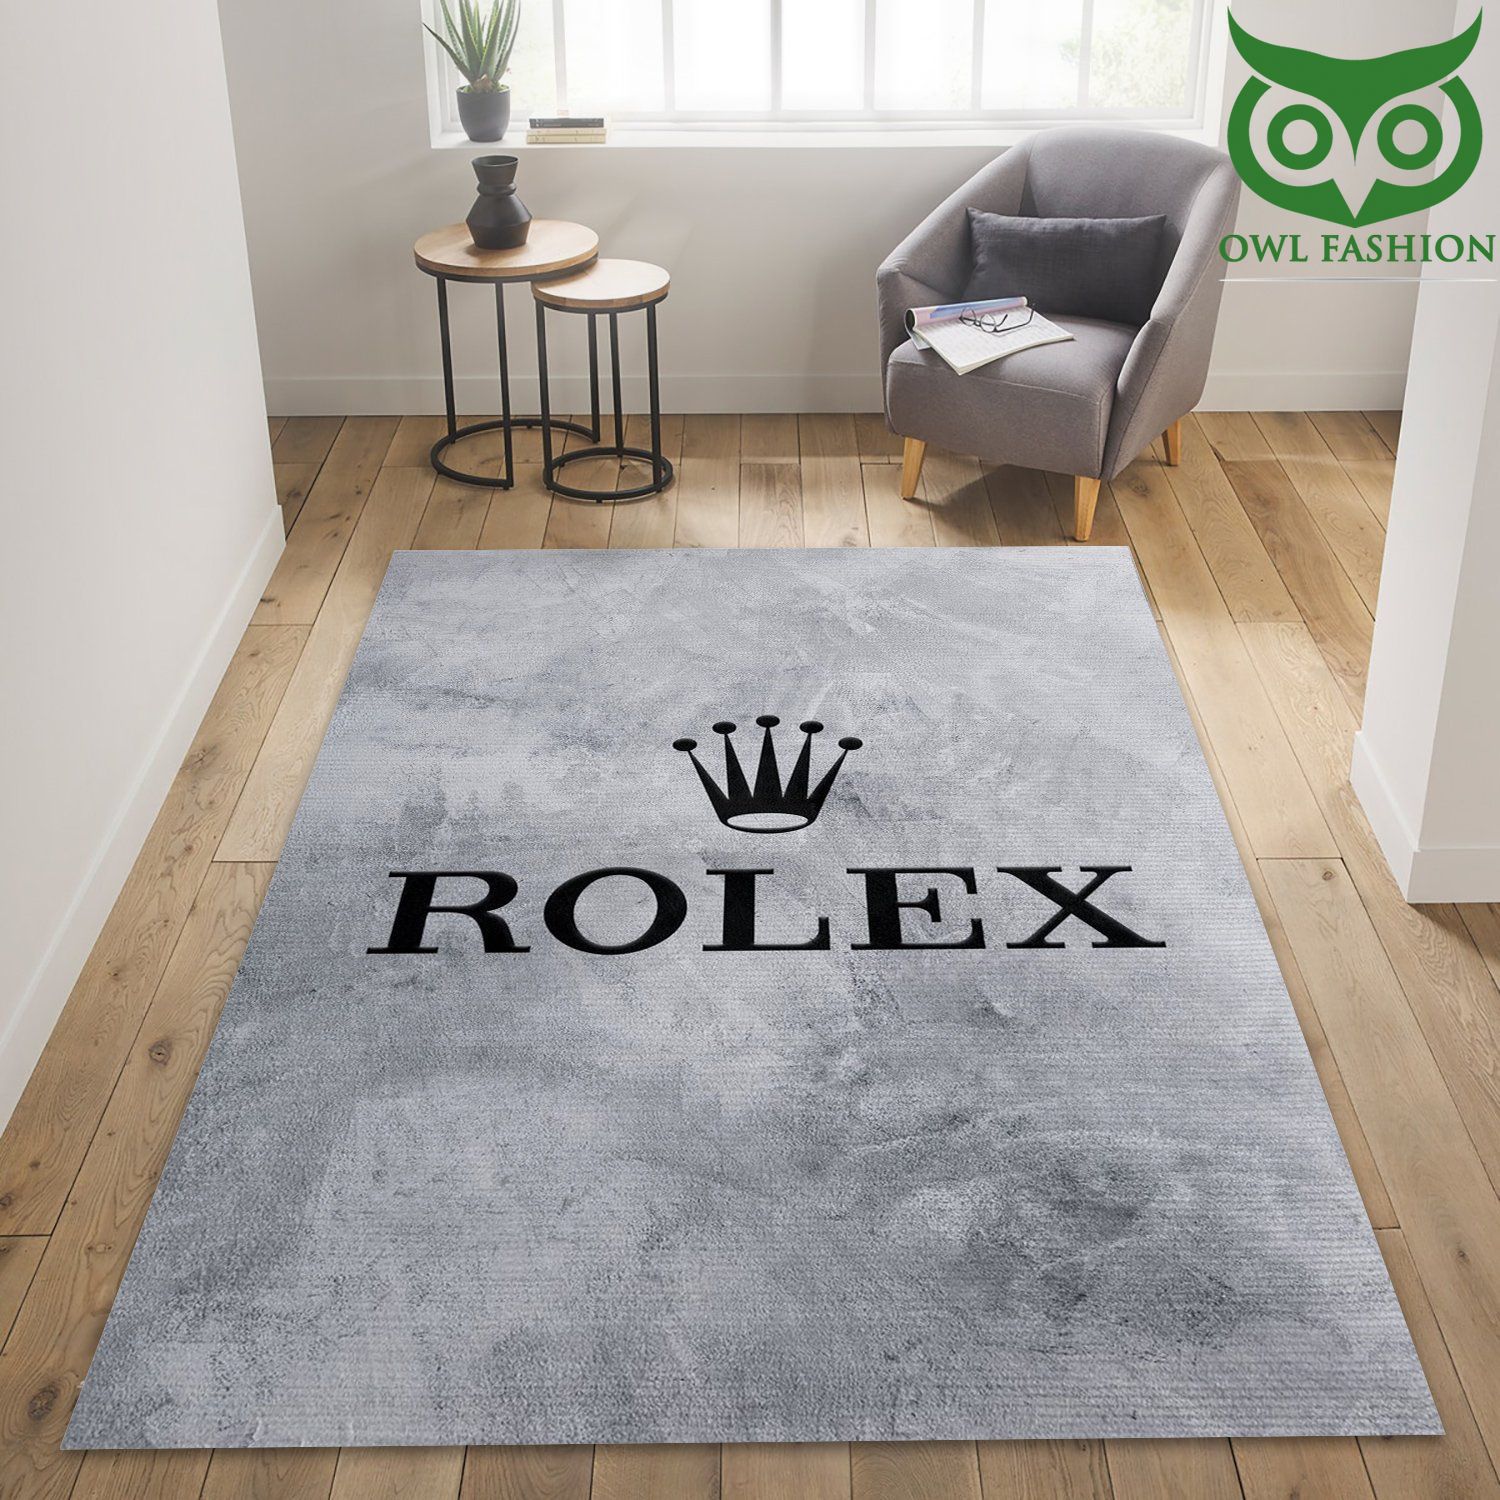 Luxury Rolex Fashion Brand carpet rug Home and floor Decoration